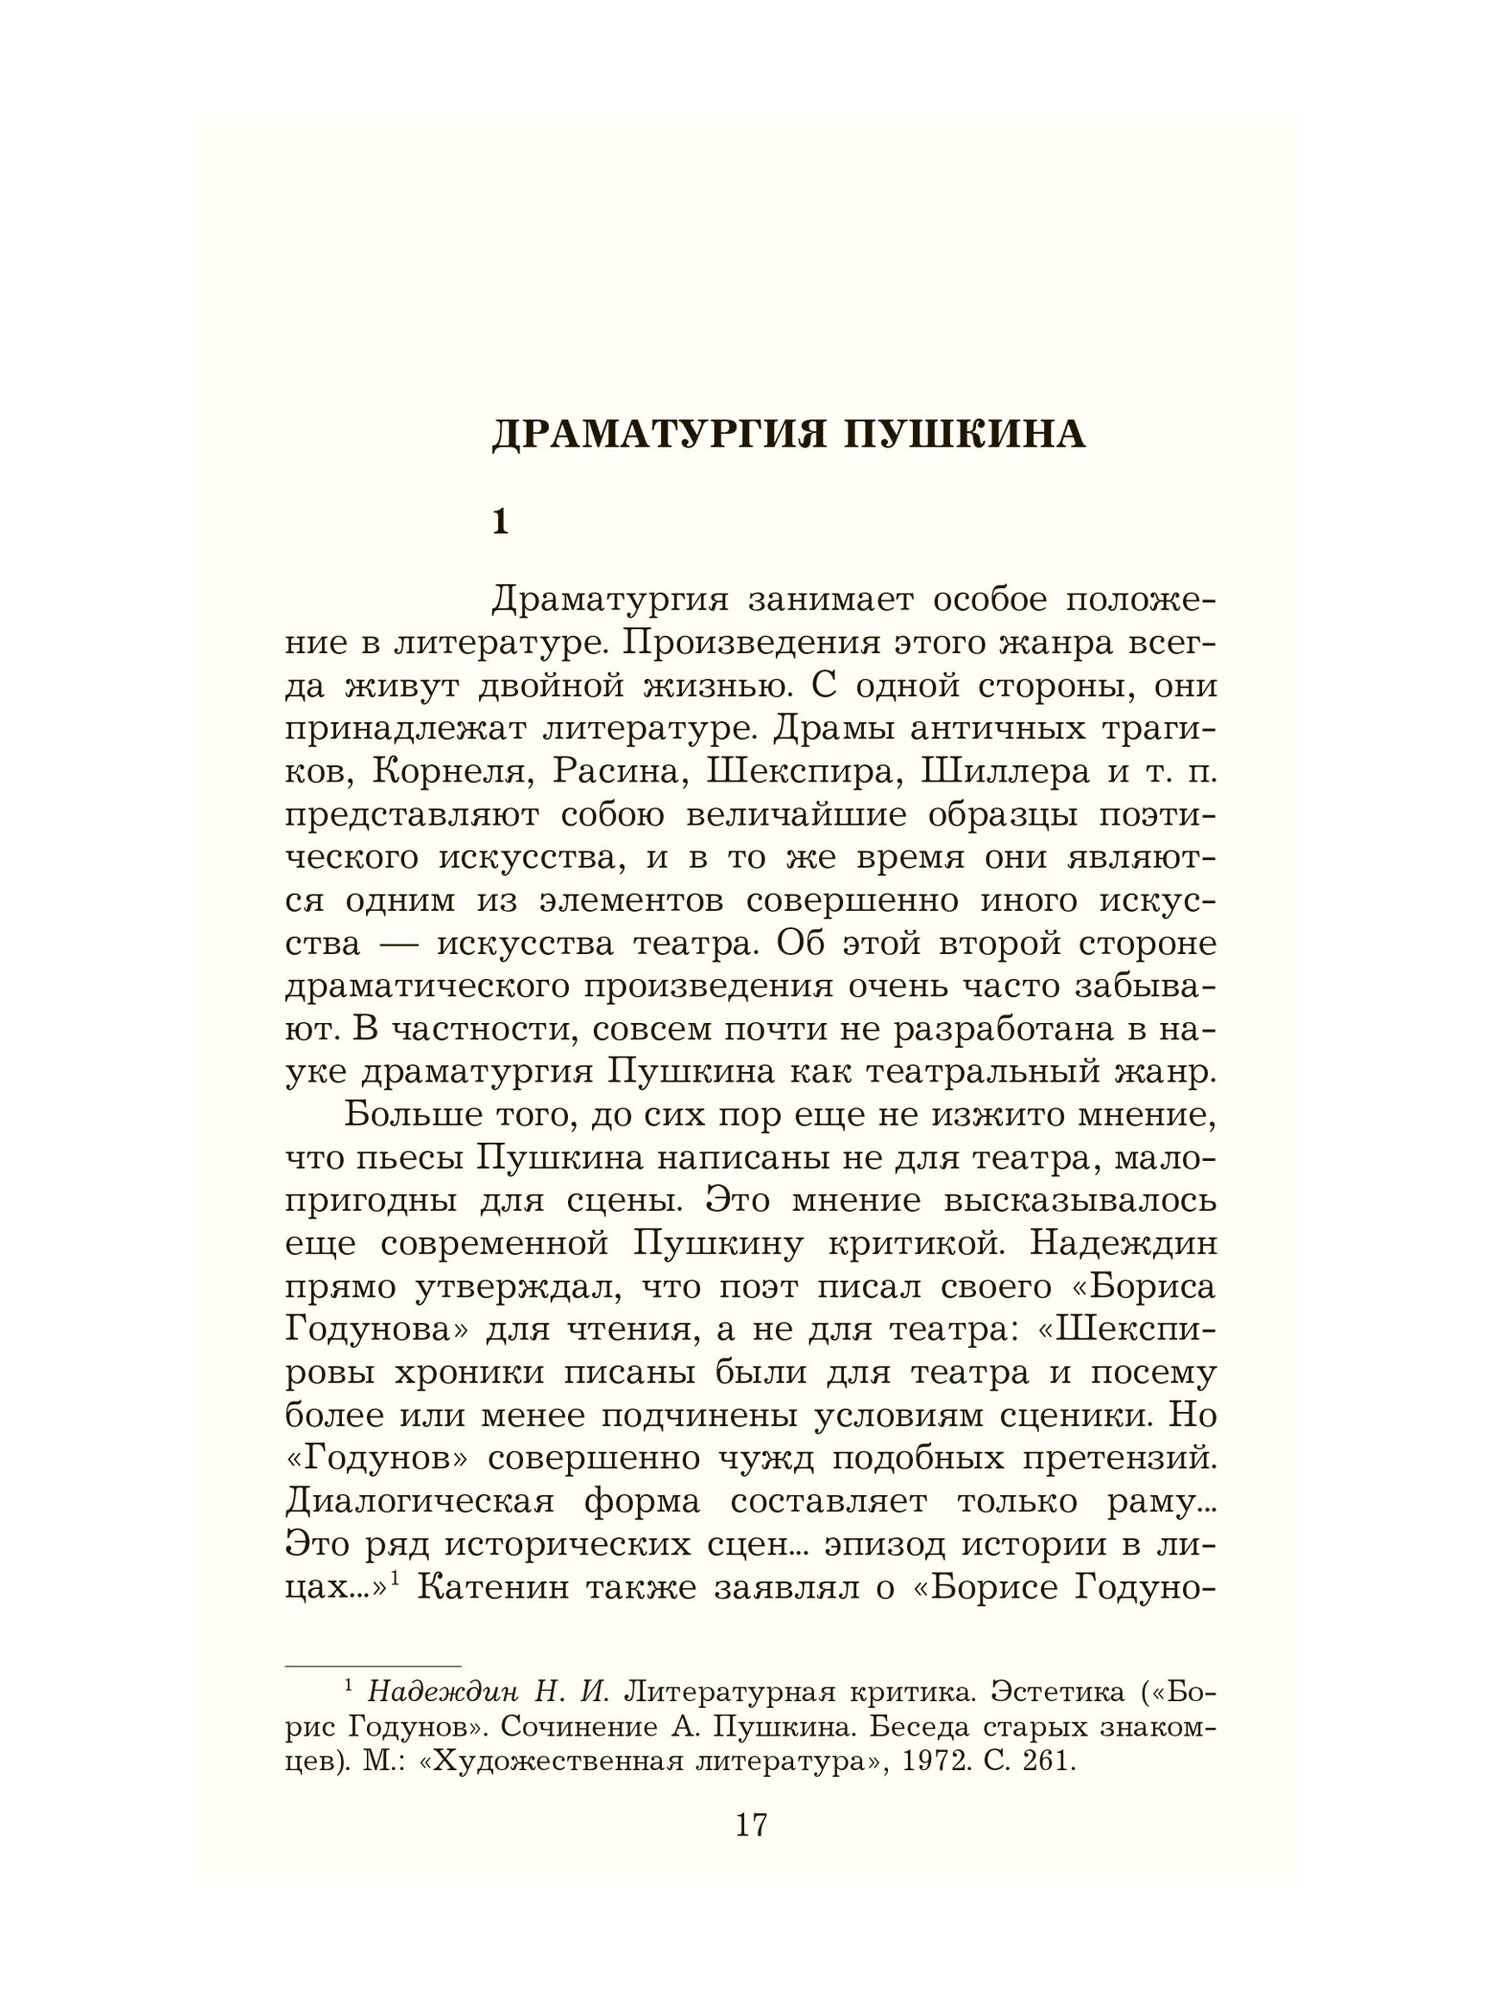 Бонди С. М. Статьи о Пушкине. Избранное.